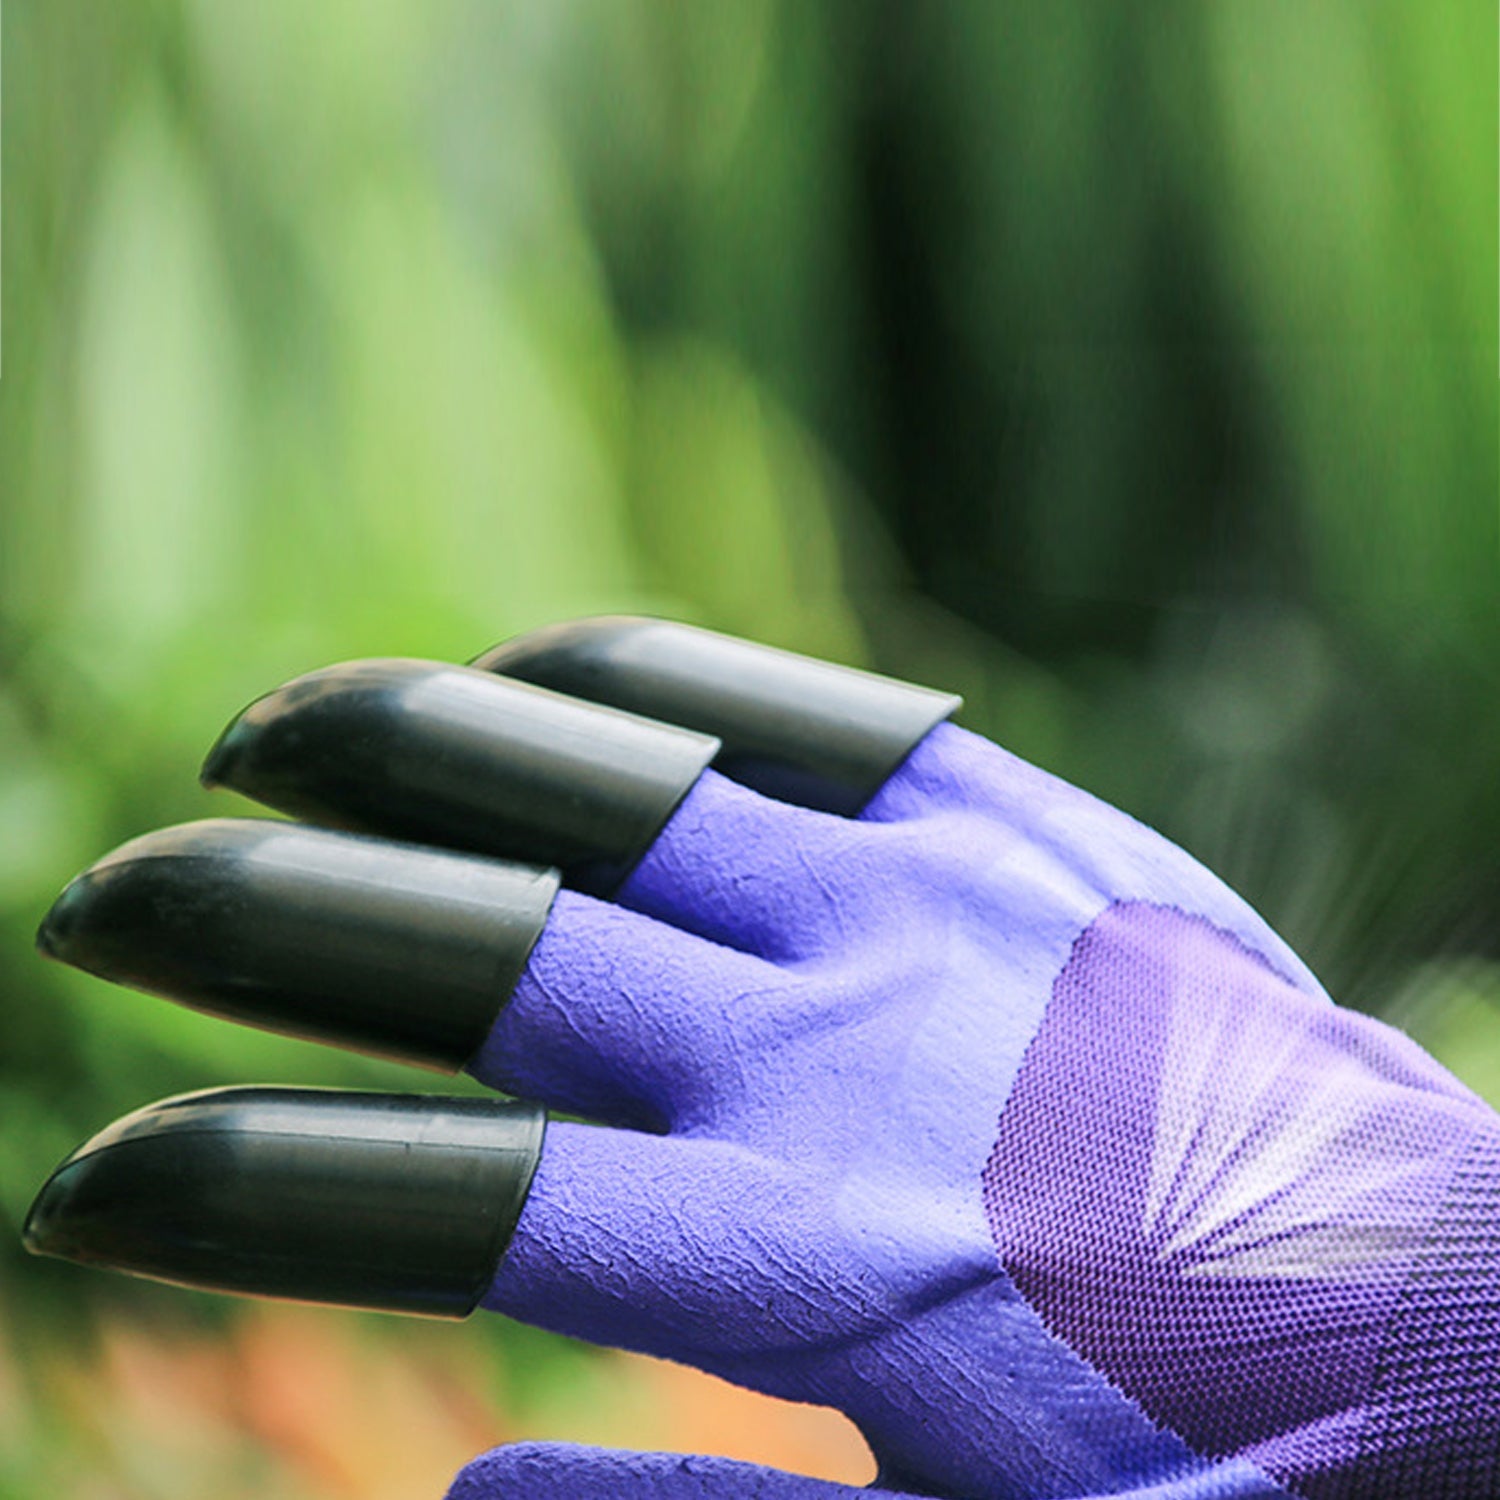 7611 Garden Genie Gloves freeshipping - DeoDap